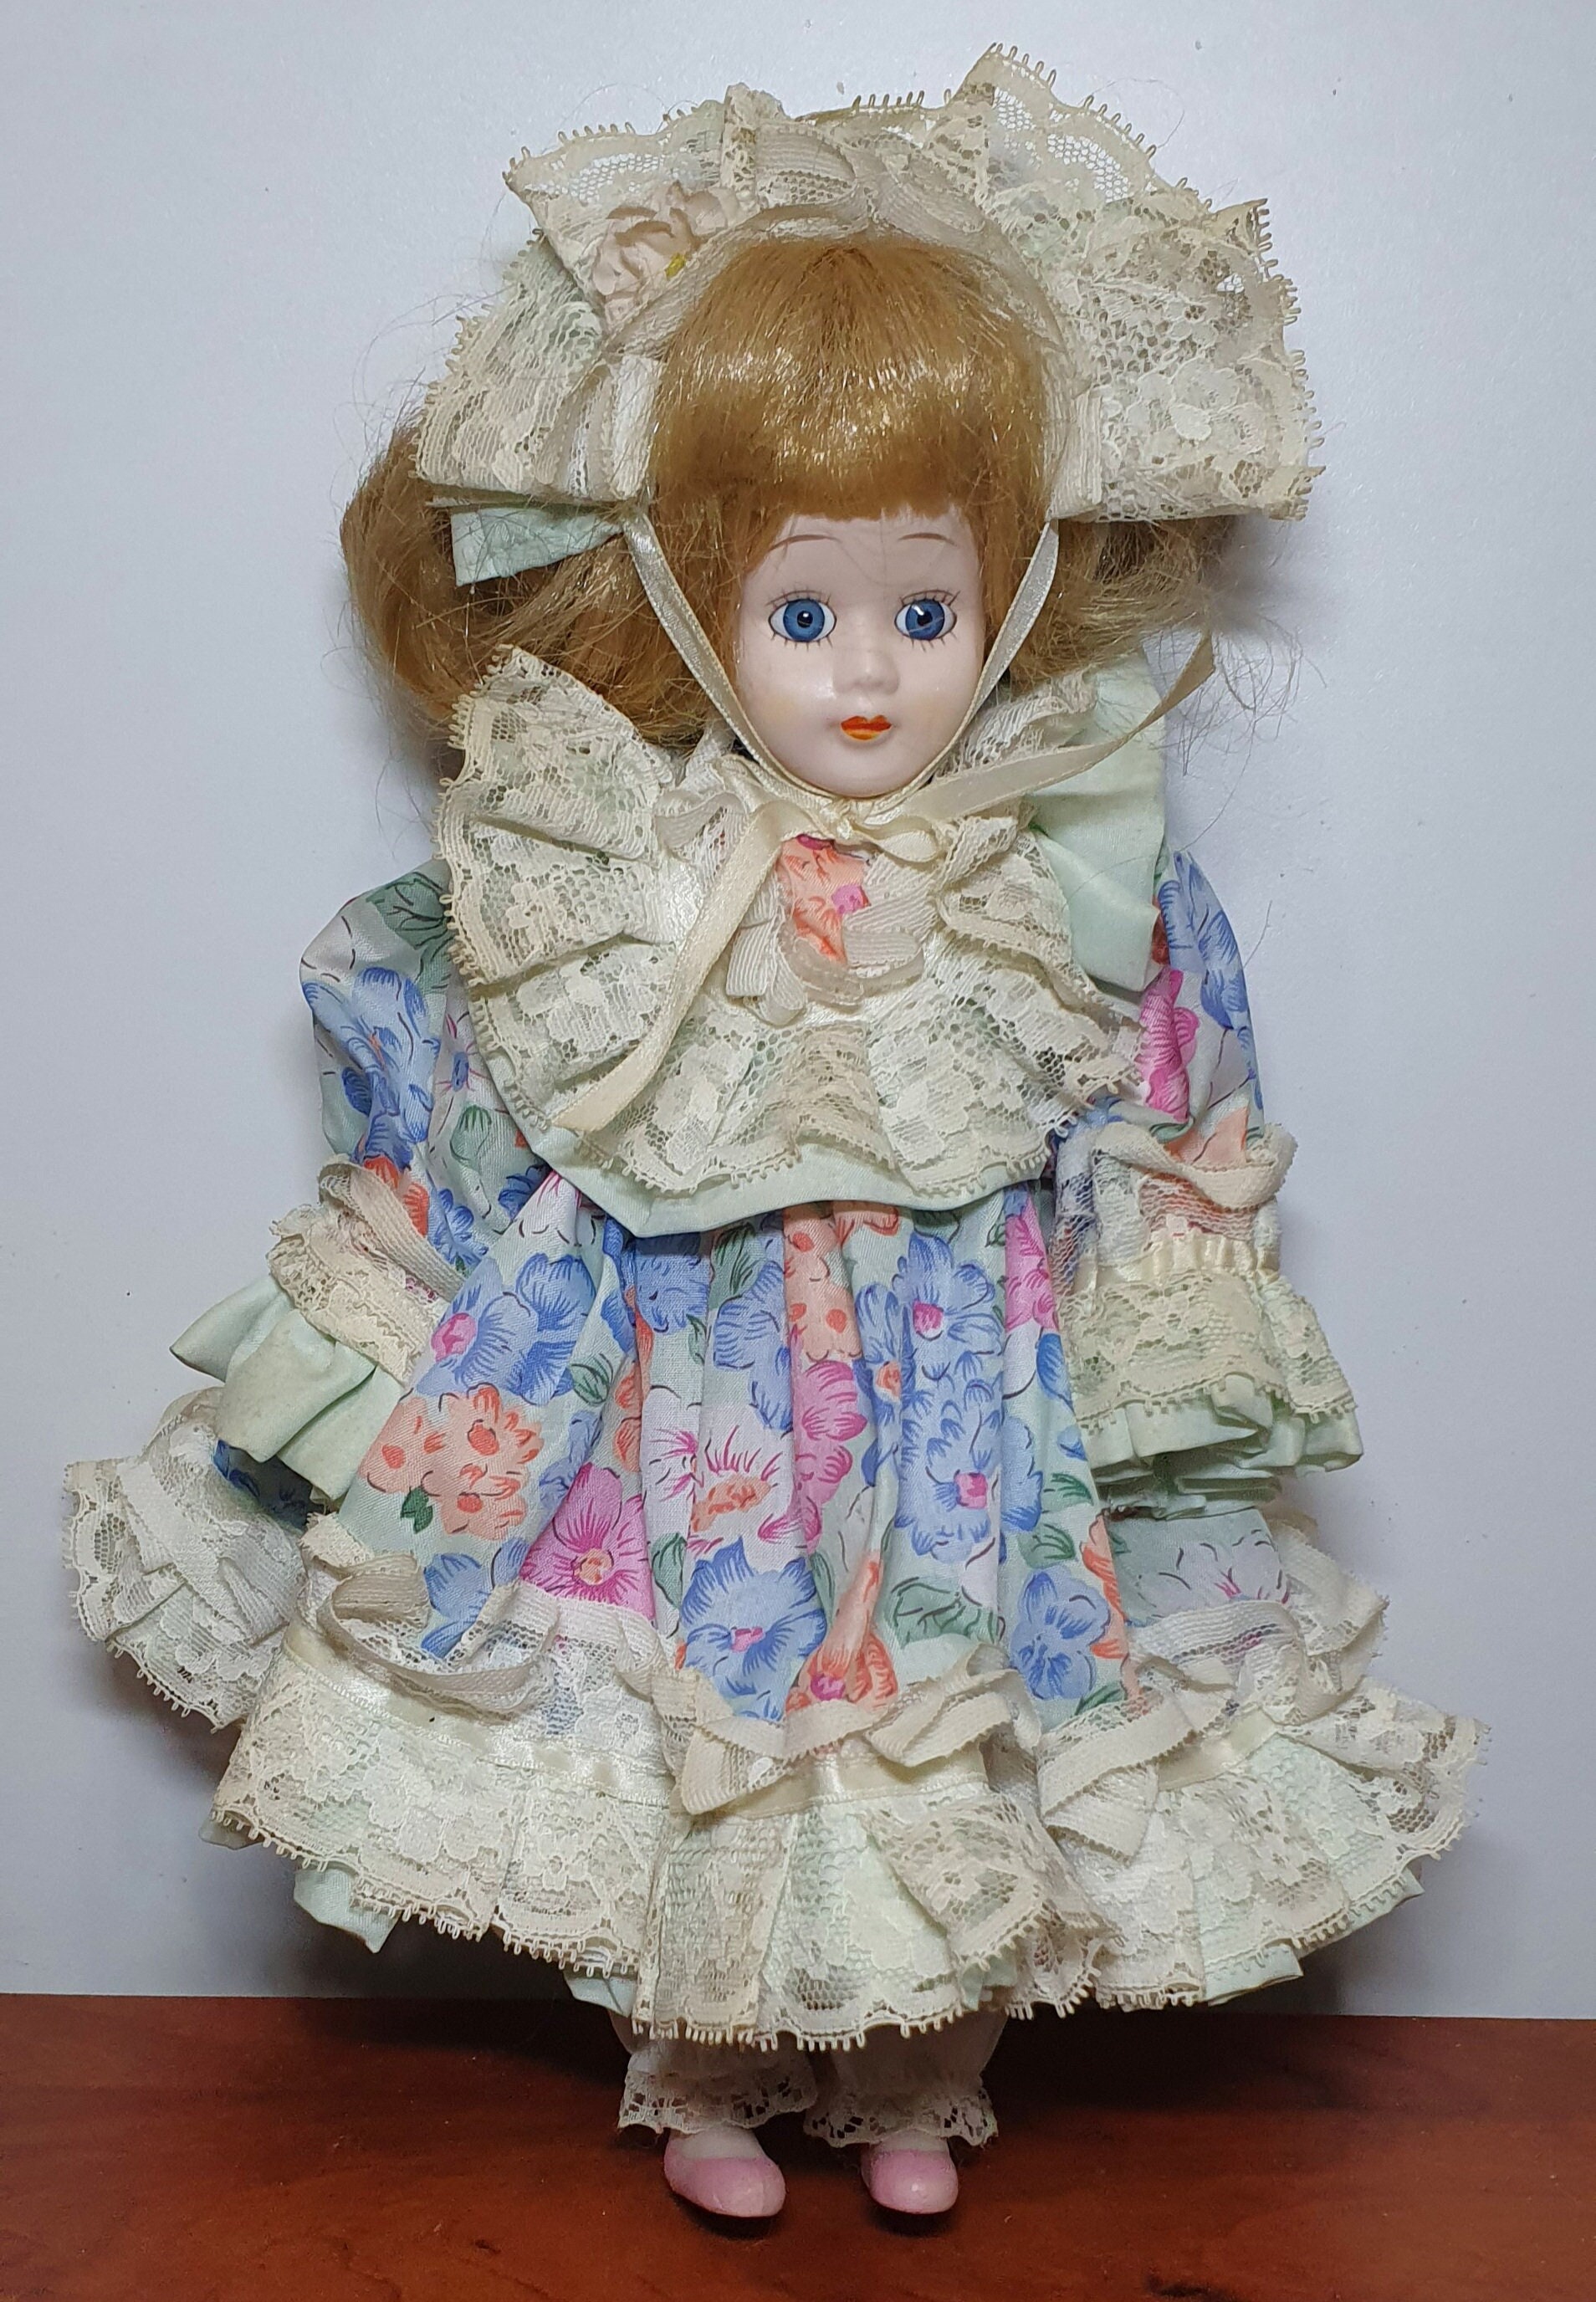 Duck House Heirloom “Caroline” Porcelain Doll for Sale in